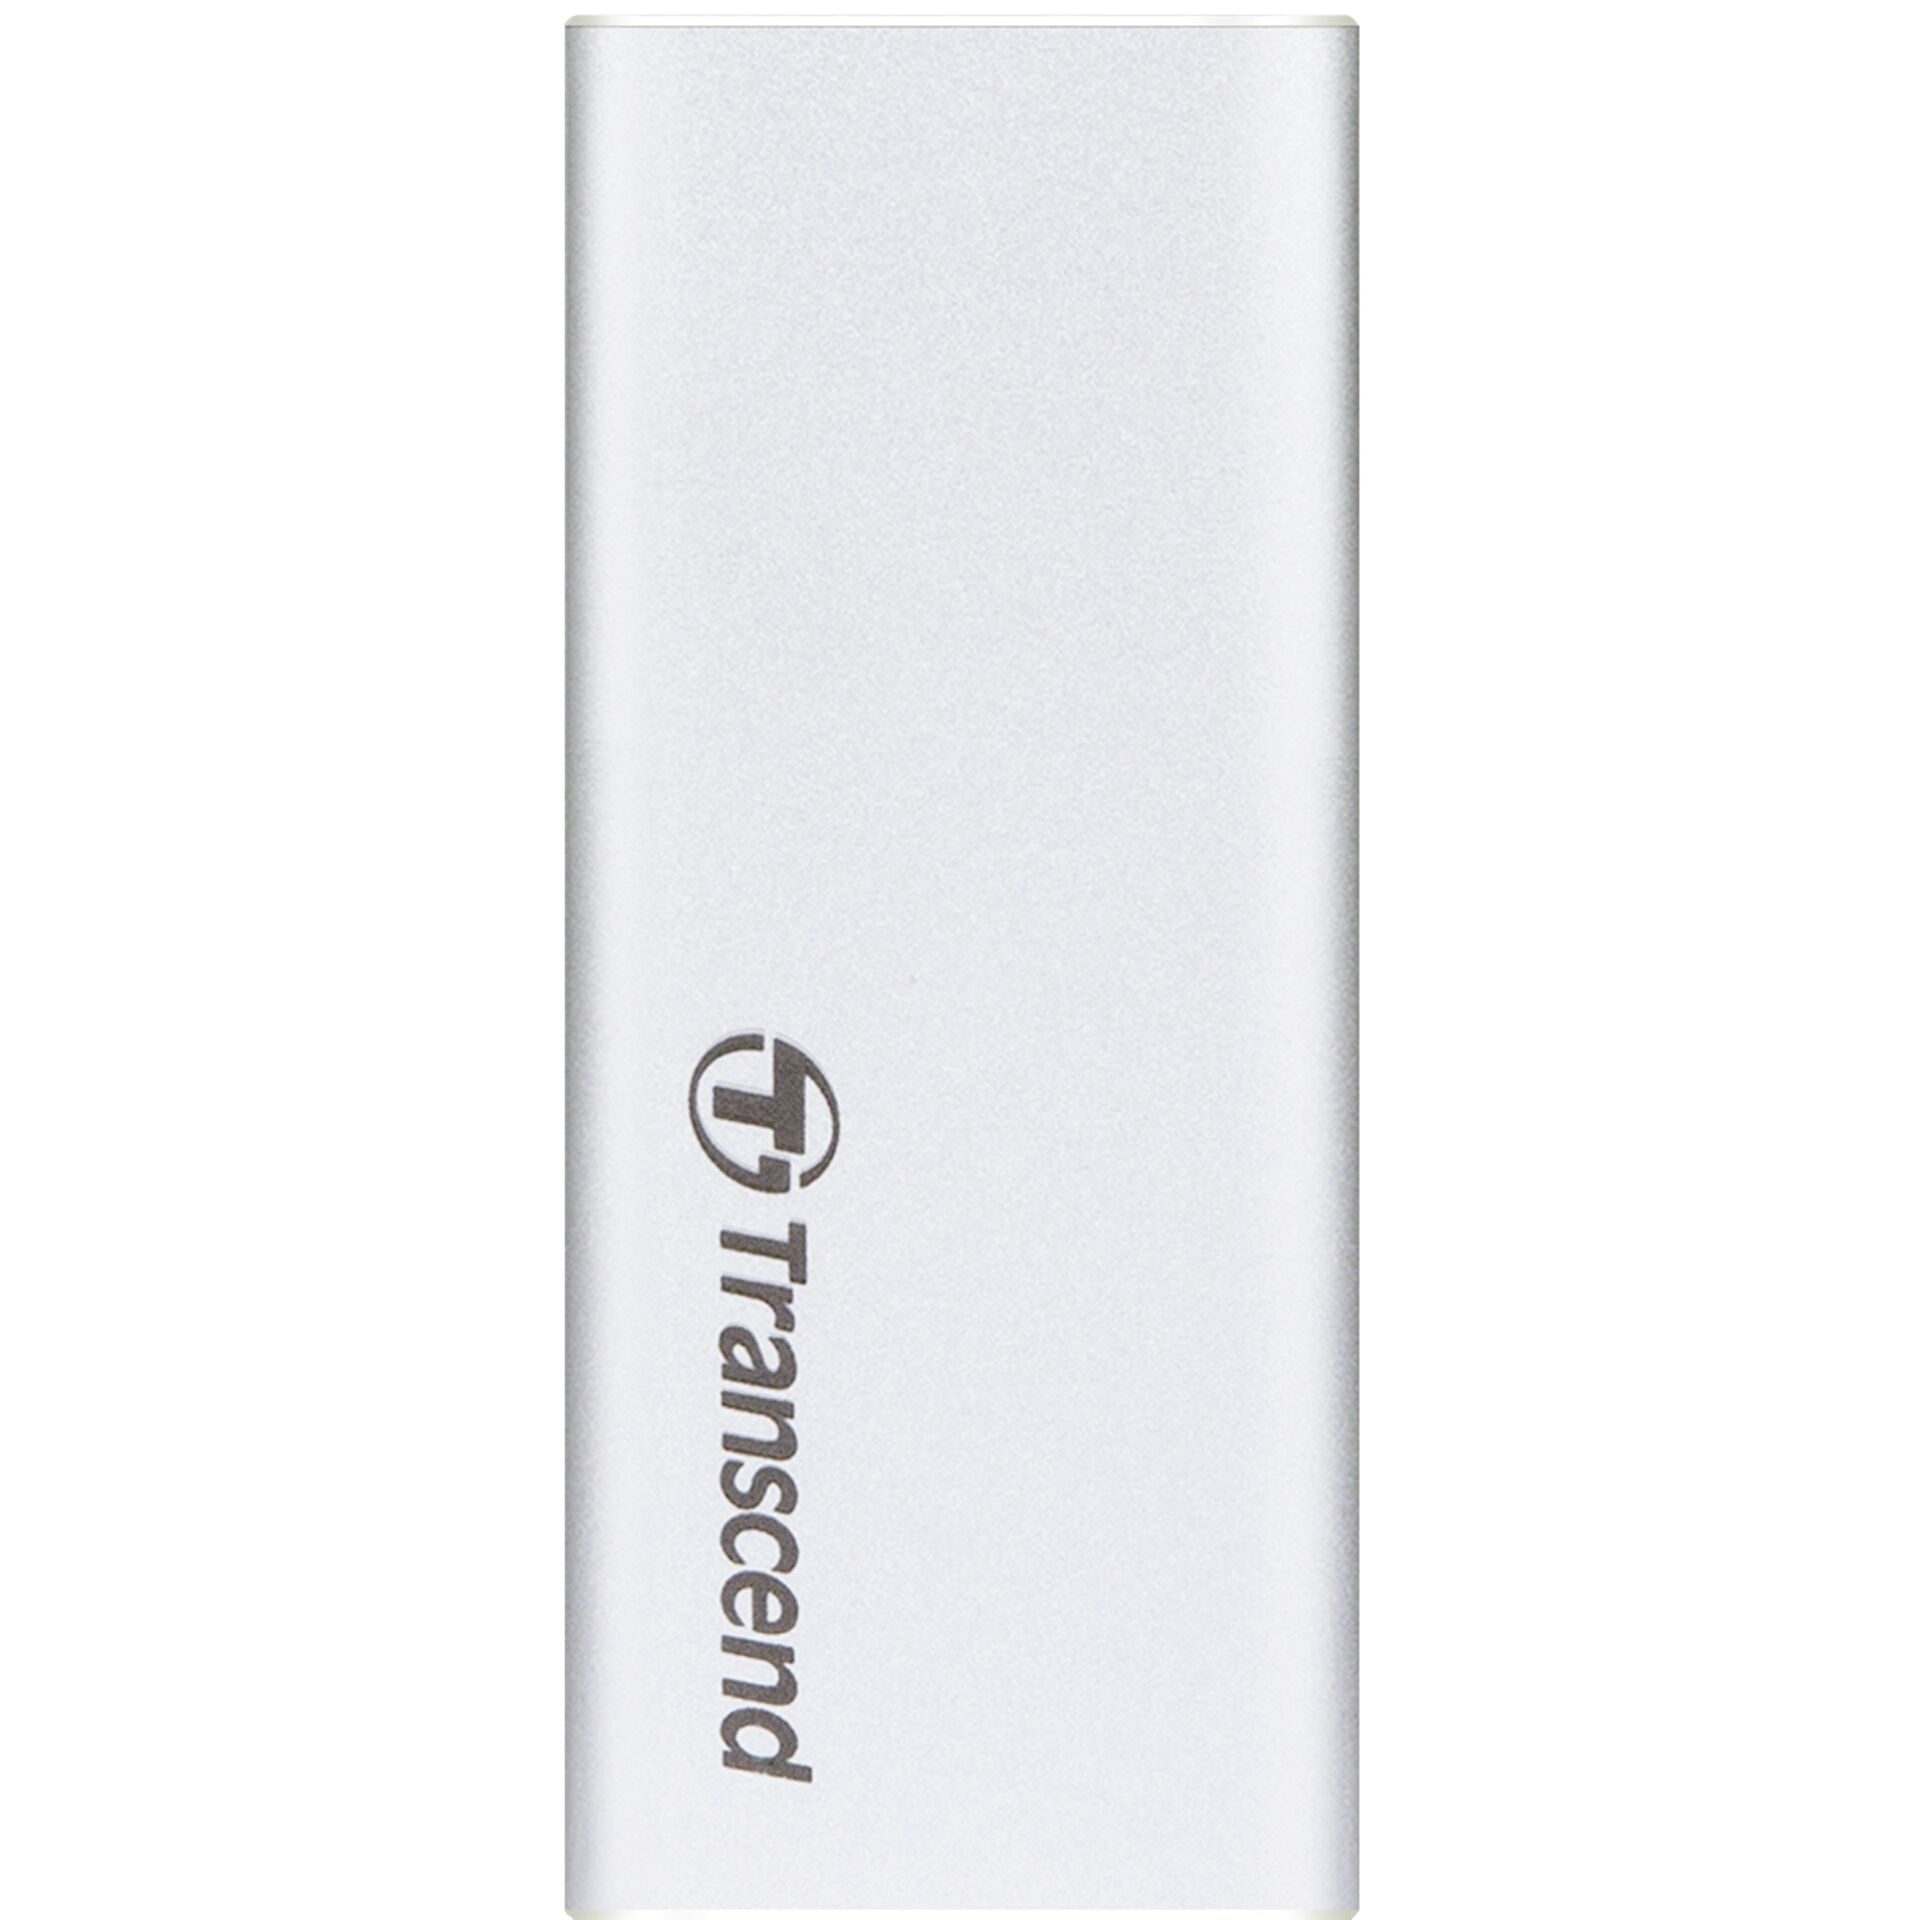 Transcend SSD ESD240C 120GB USB-C USB 3.1 Gen 2